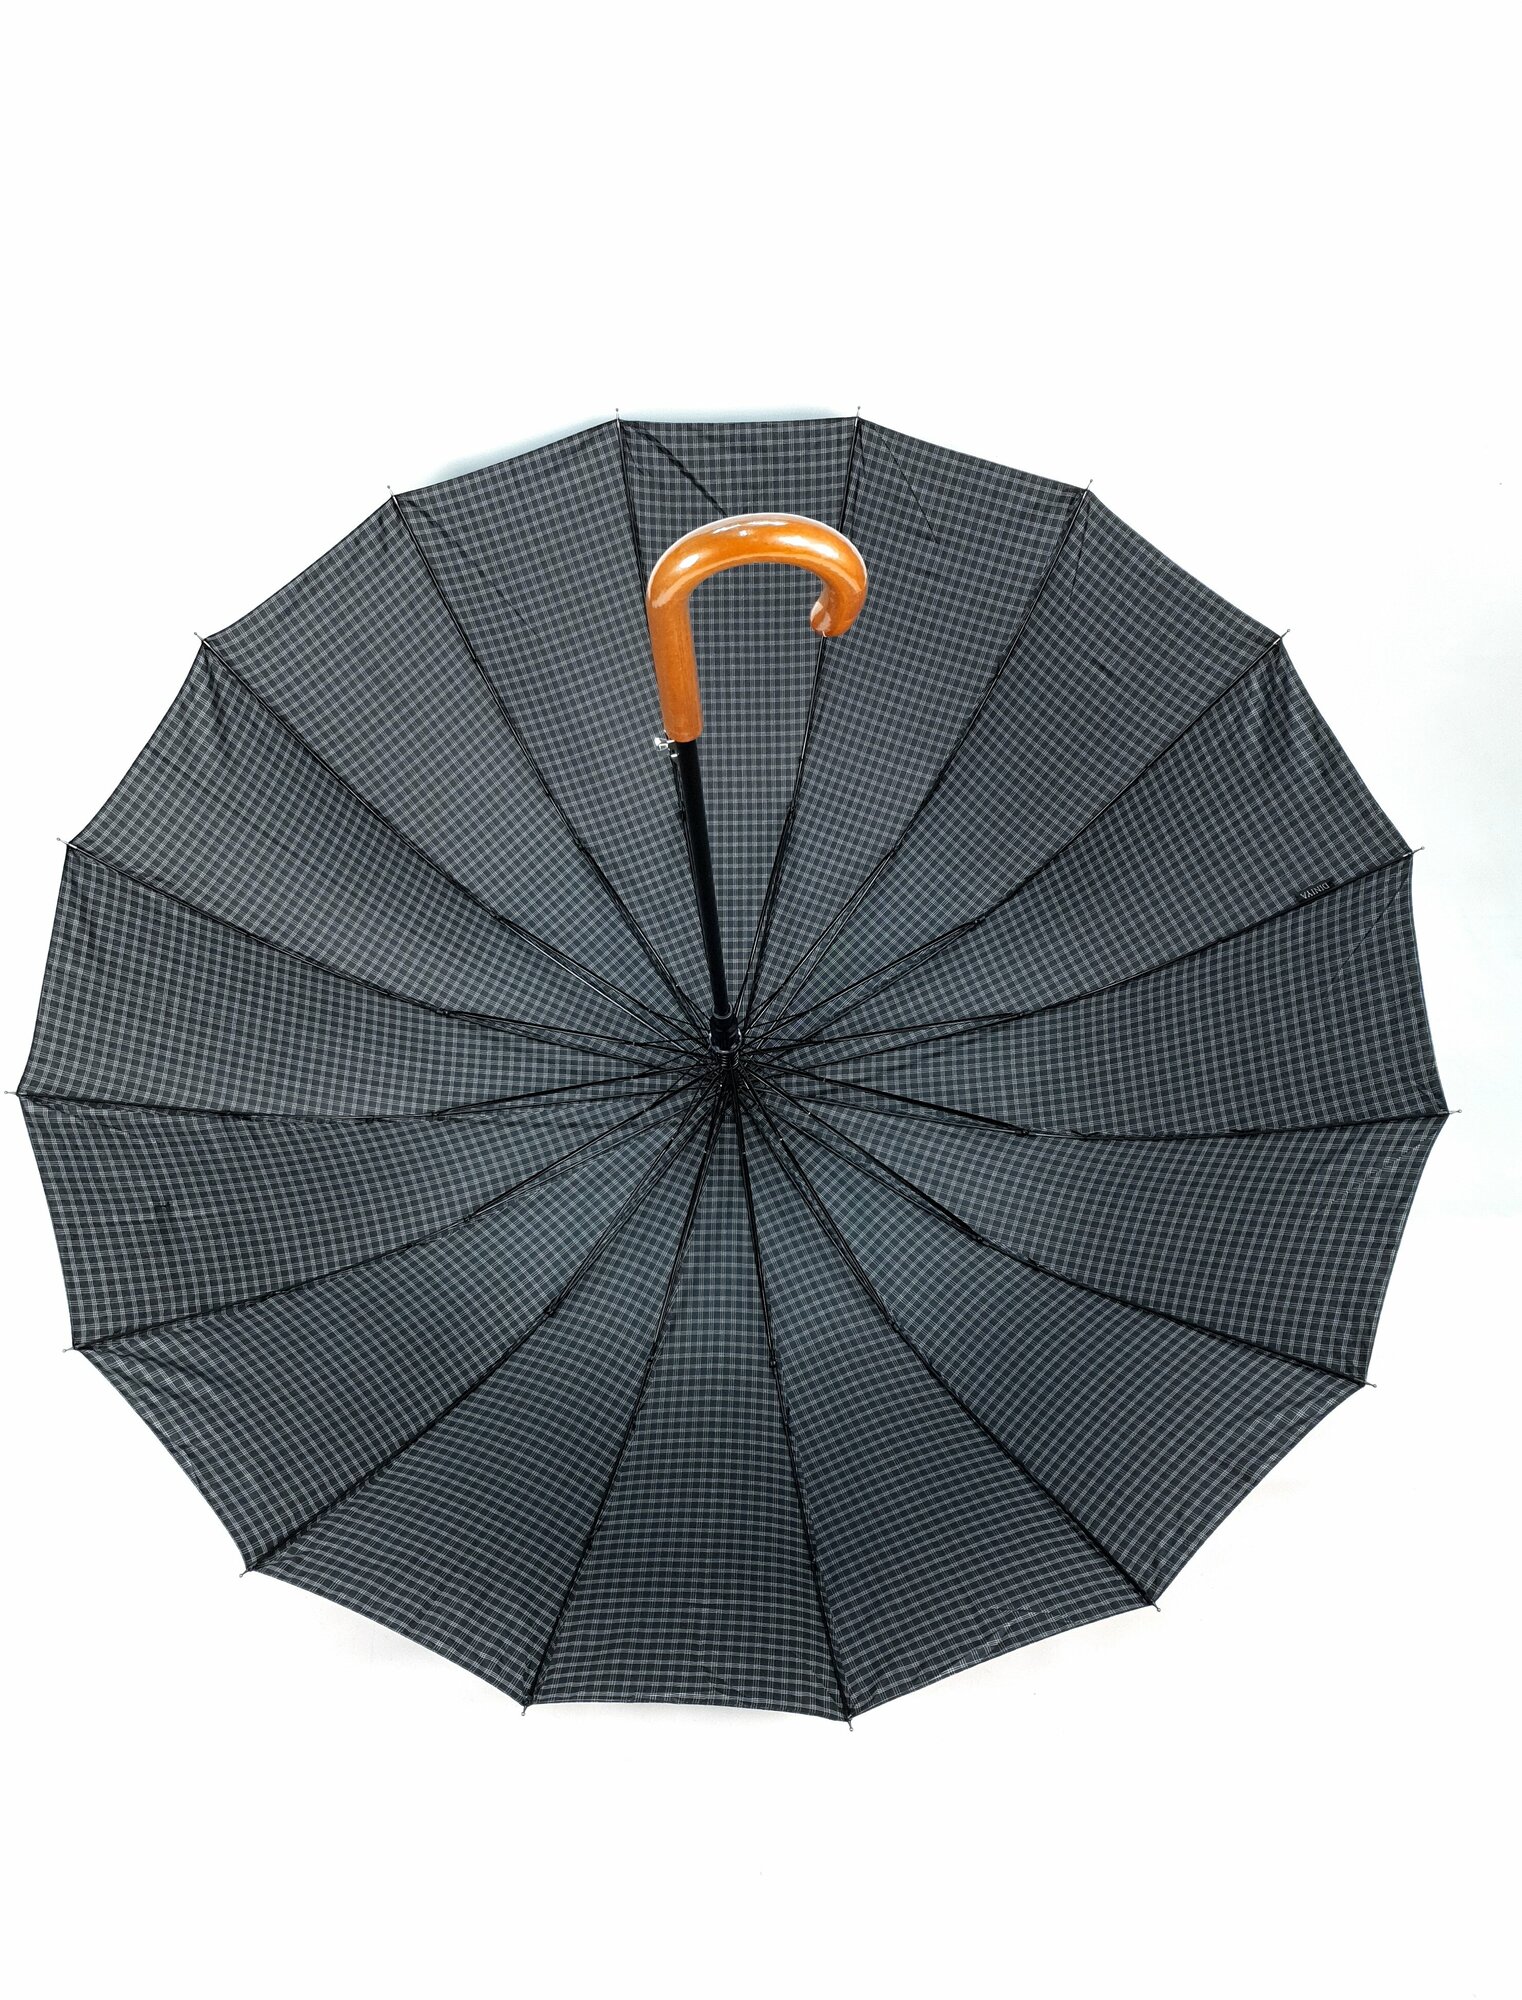 Зонт-трость Diniya